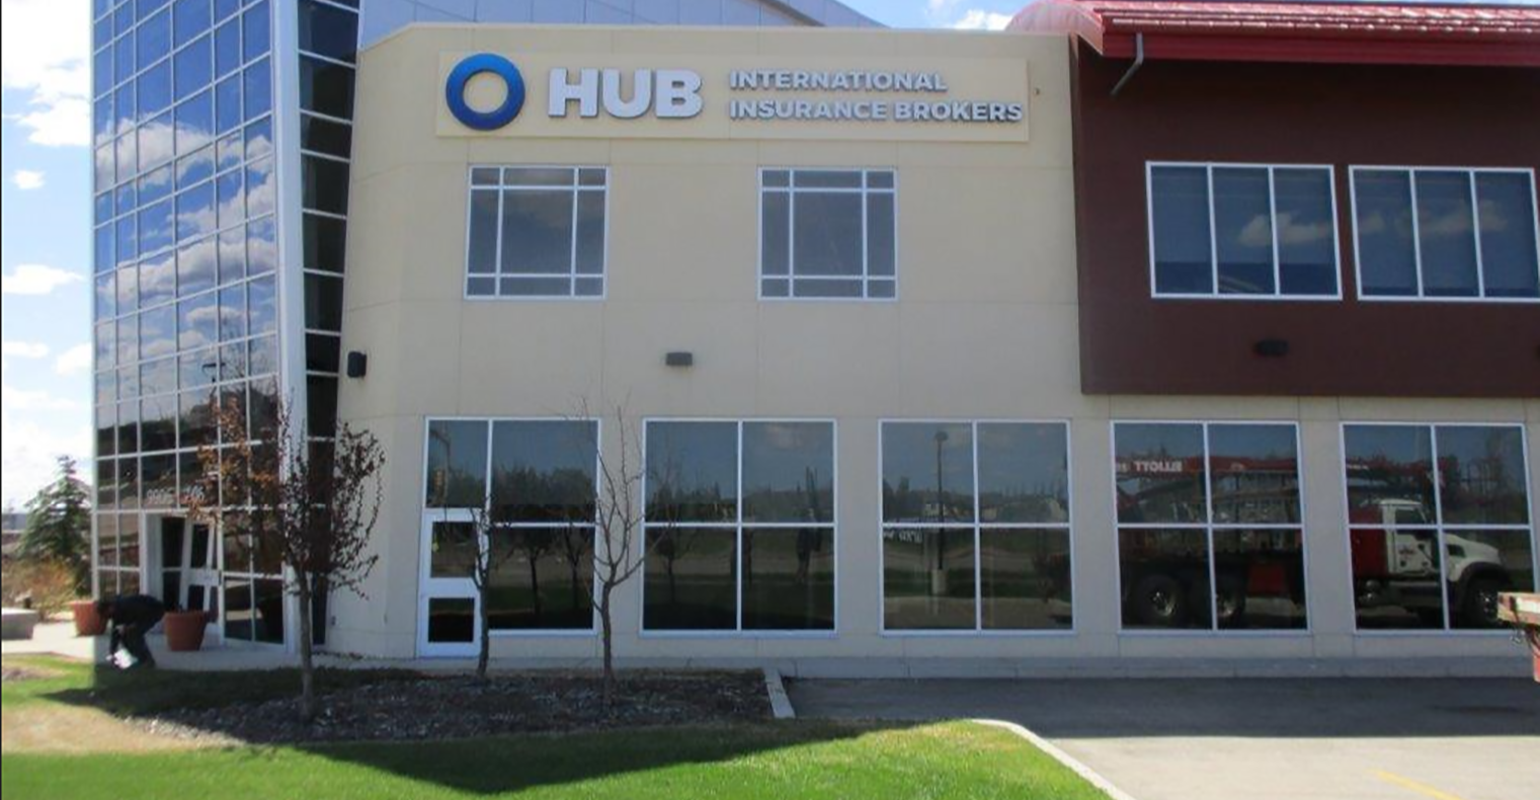 hub international logo